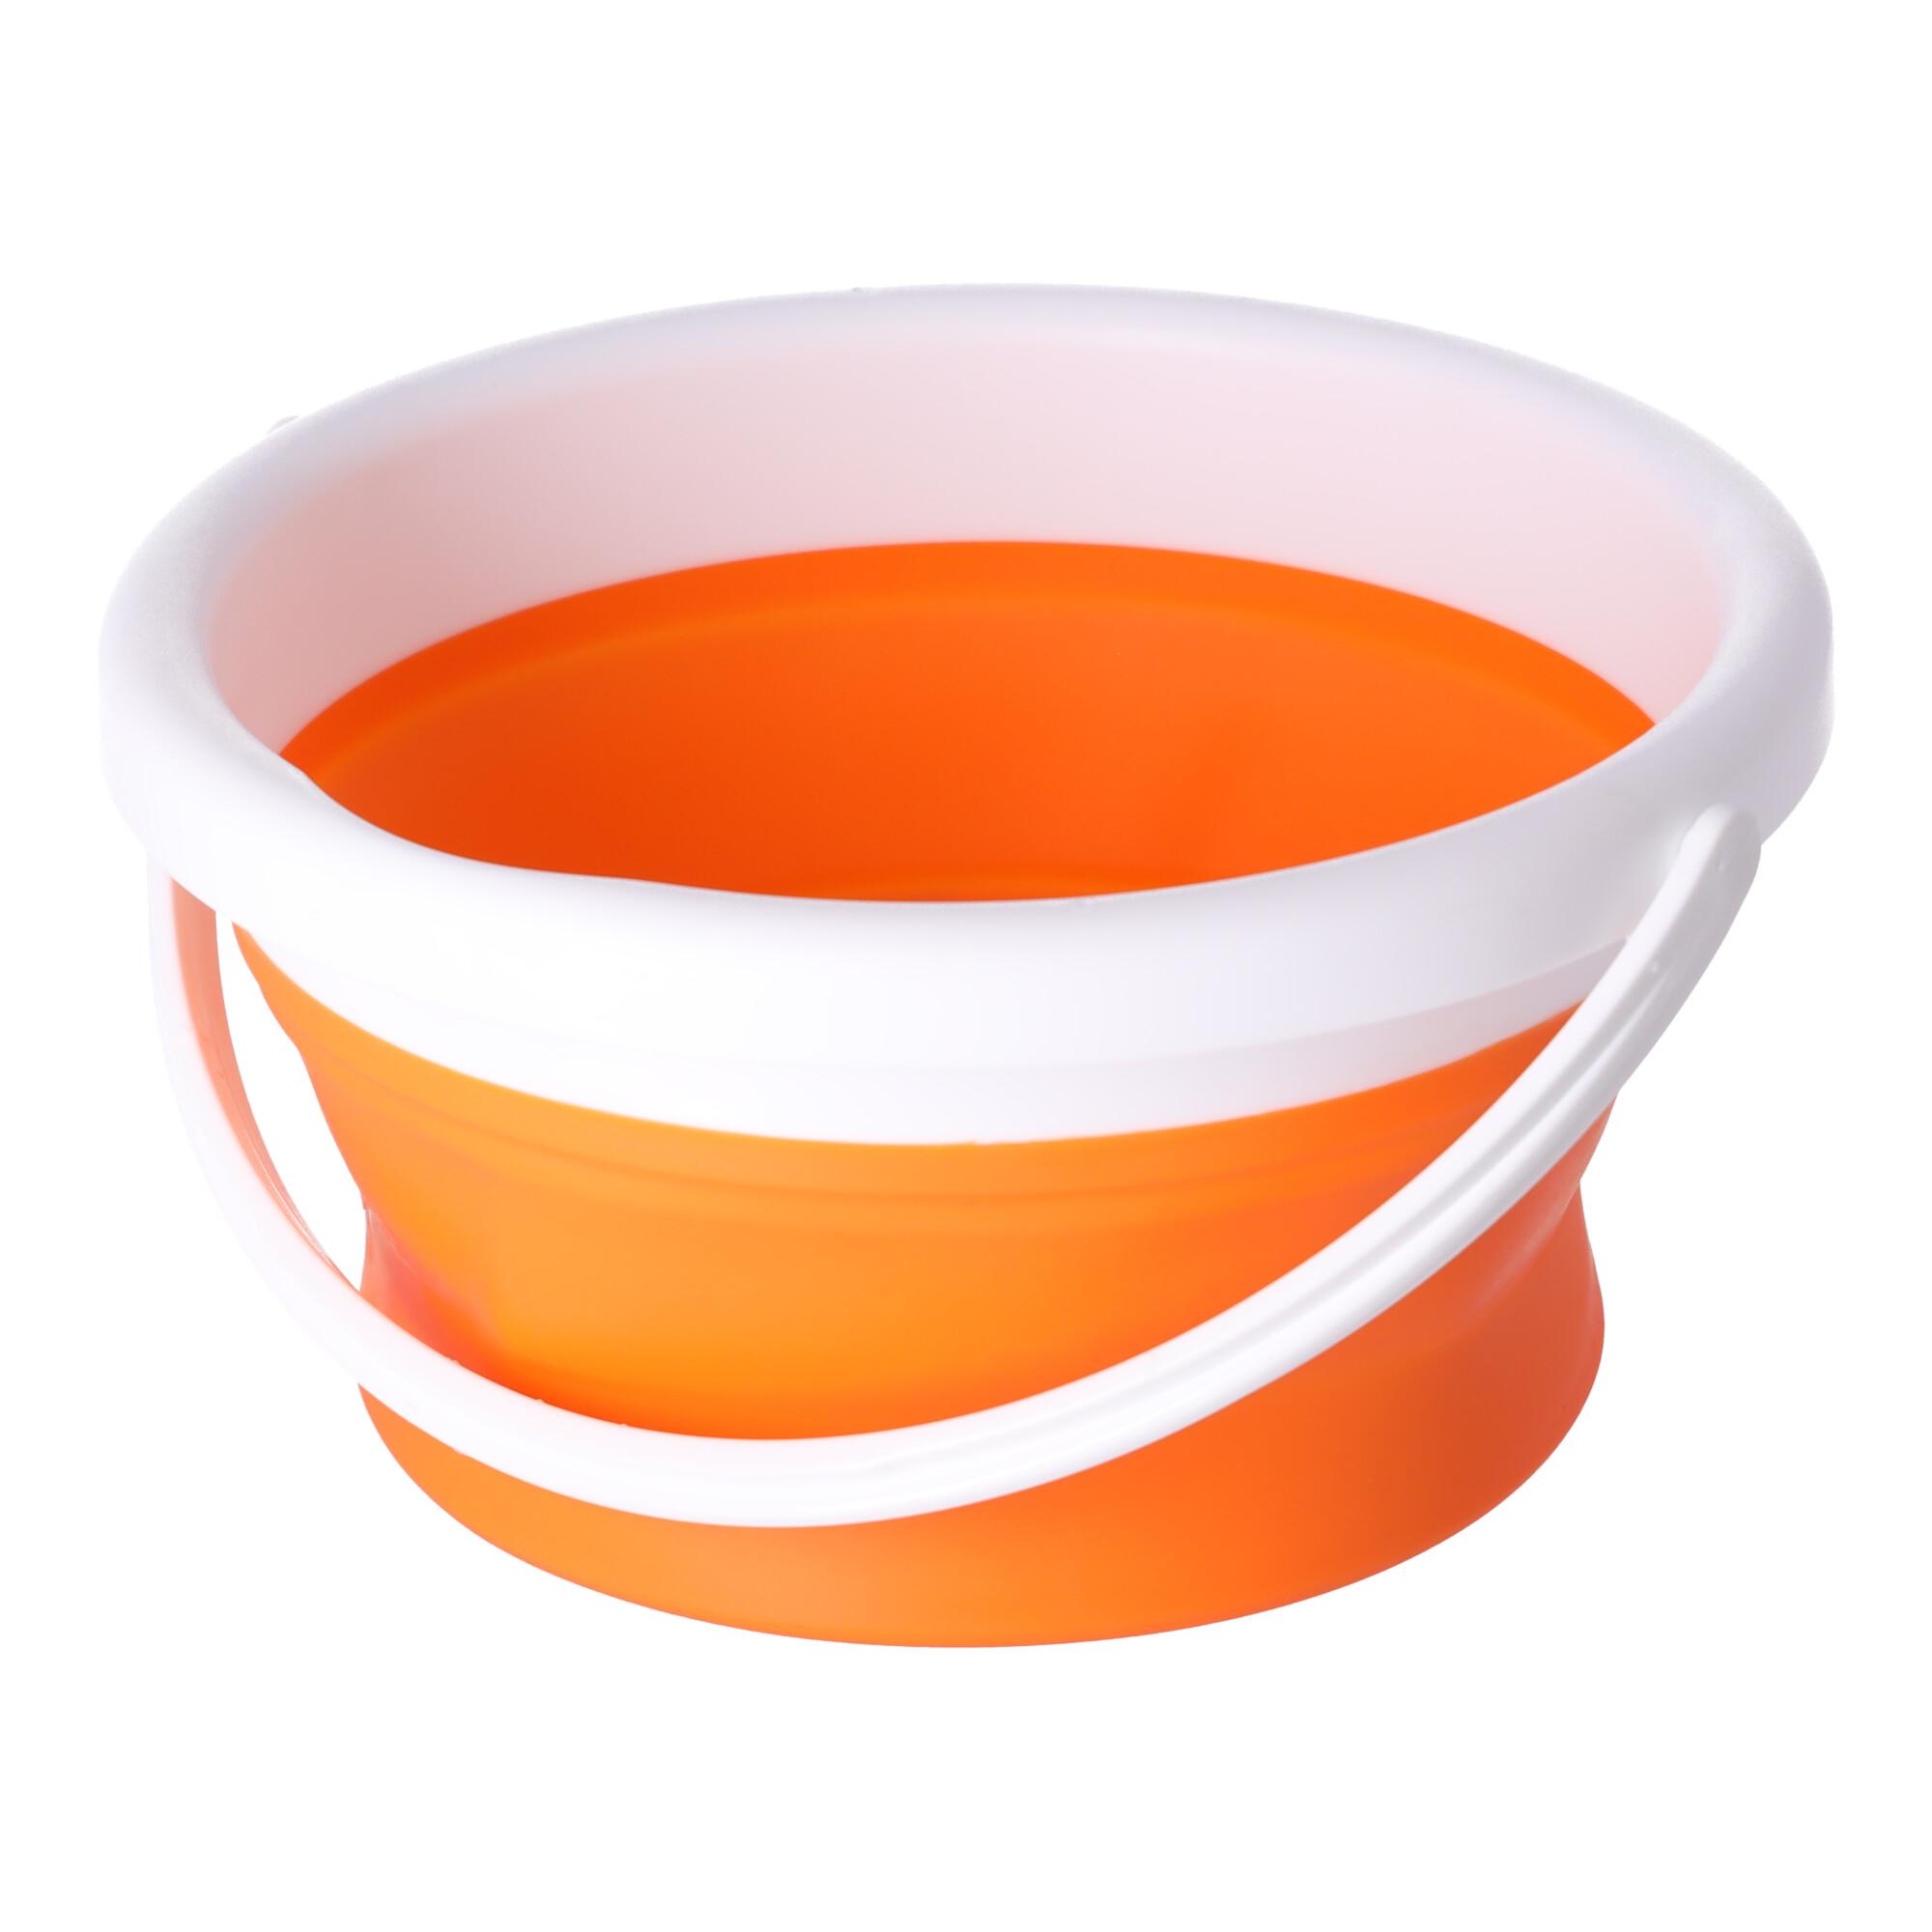 Silicone bucket 5L foldable - orange and white